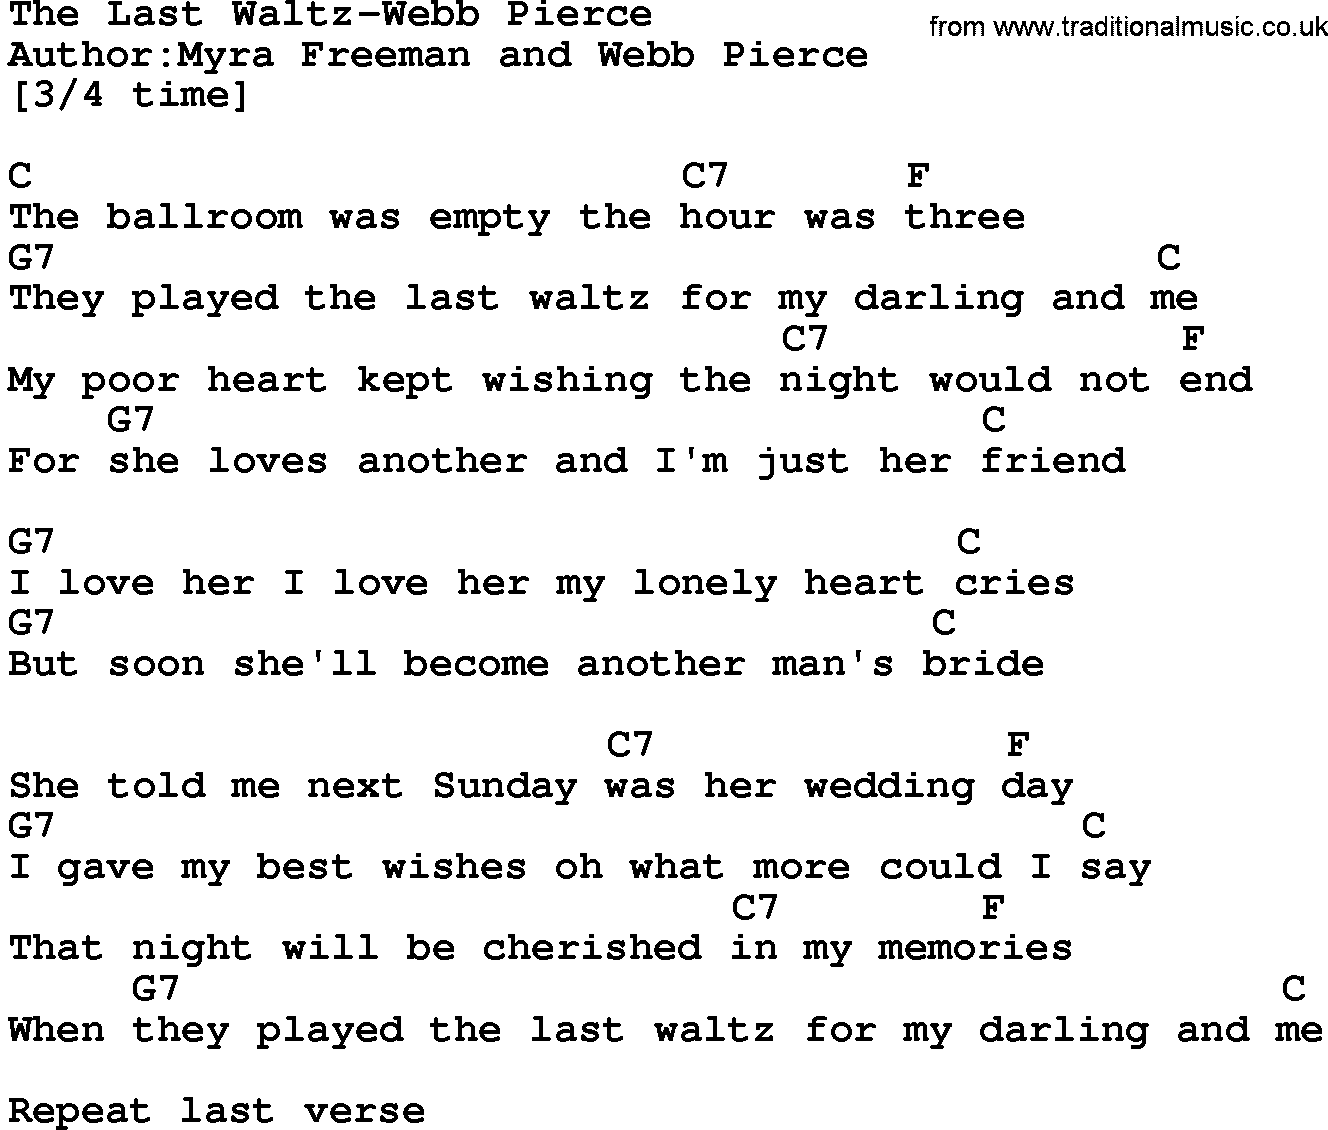 Country music song: The Last Waltz-Webb Pierce lyrics and chords